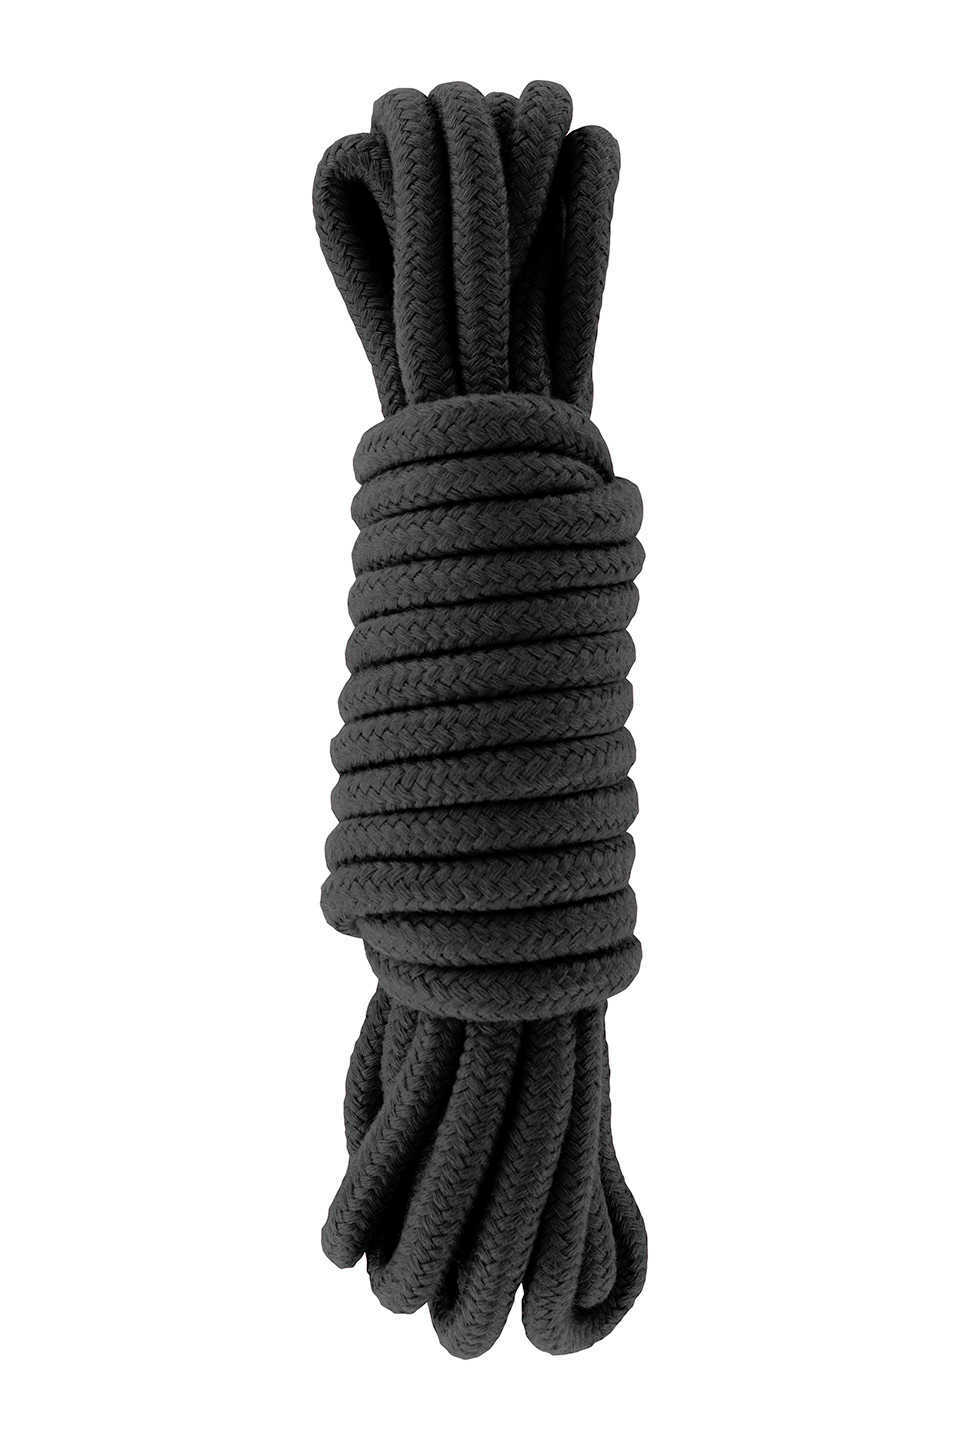 Bondage Rope 5 Meter Black